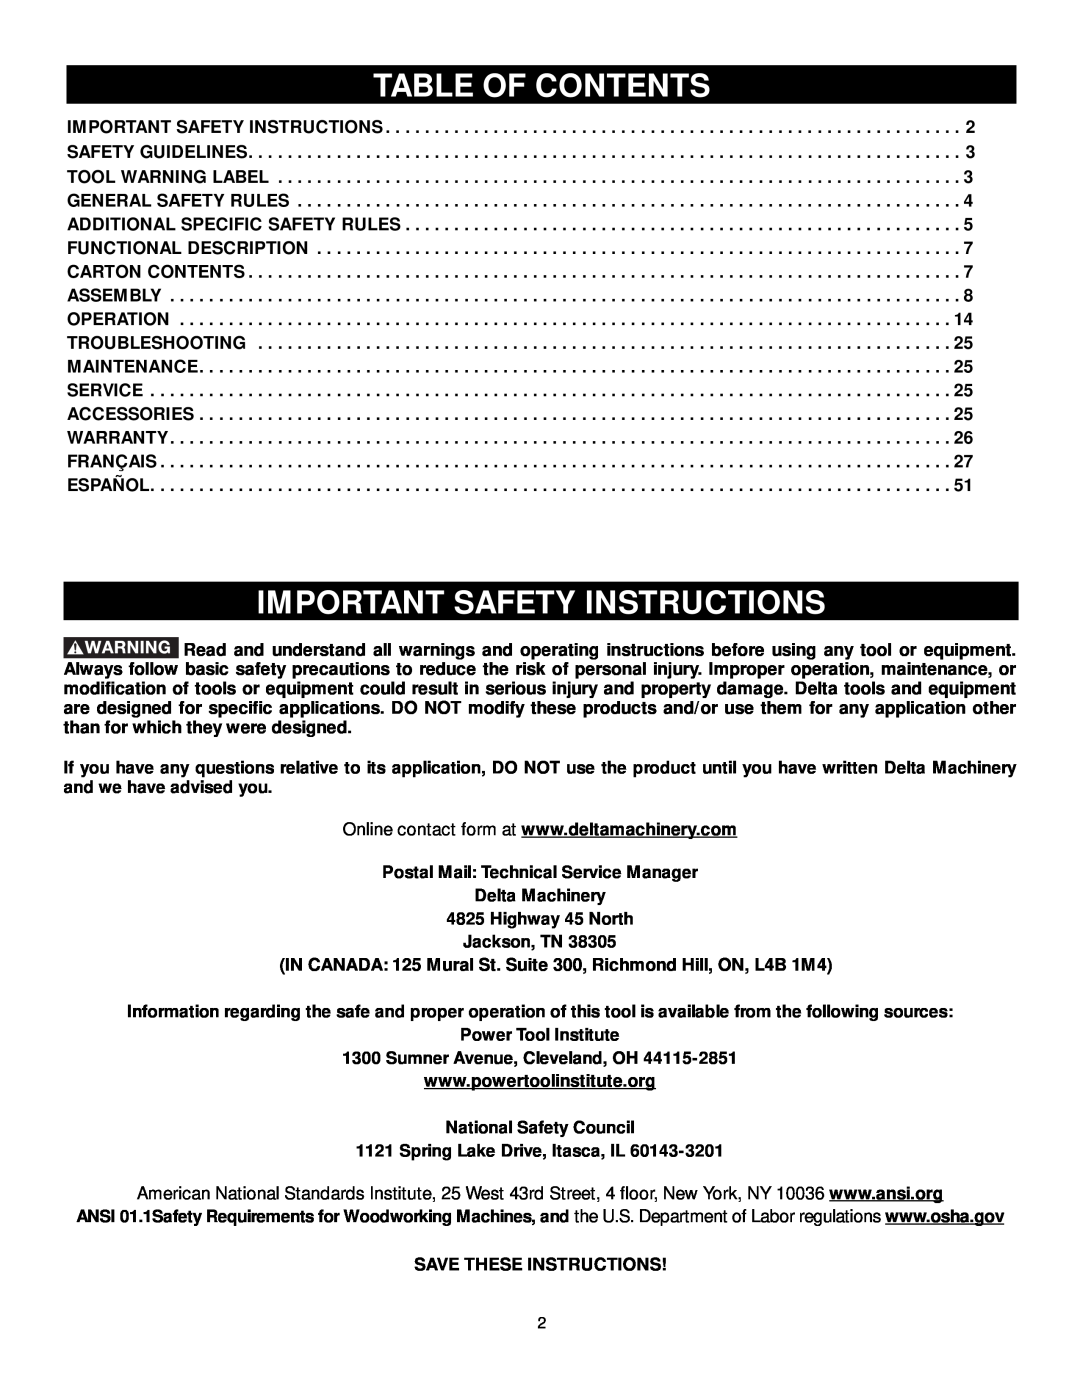 DeWalt 36-L53L, 36-L31X, 36-L51X, 36-L51L Table Of Contents, Important Safety Instructions, Save These Instructions 